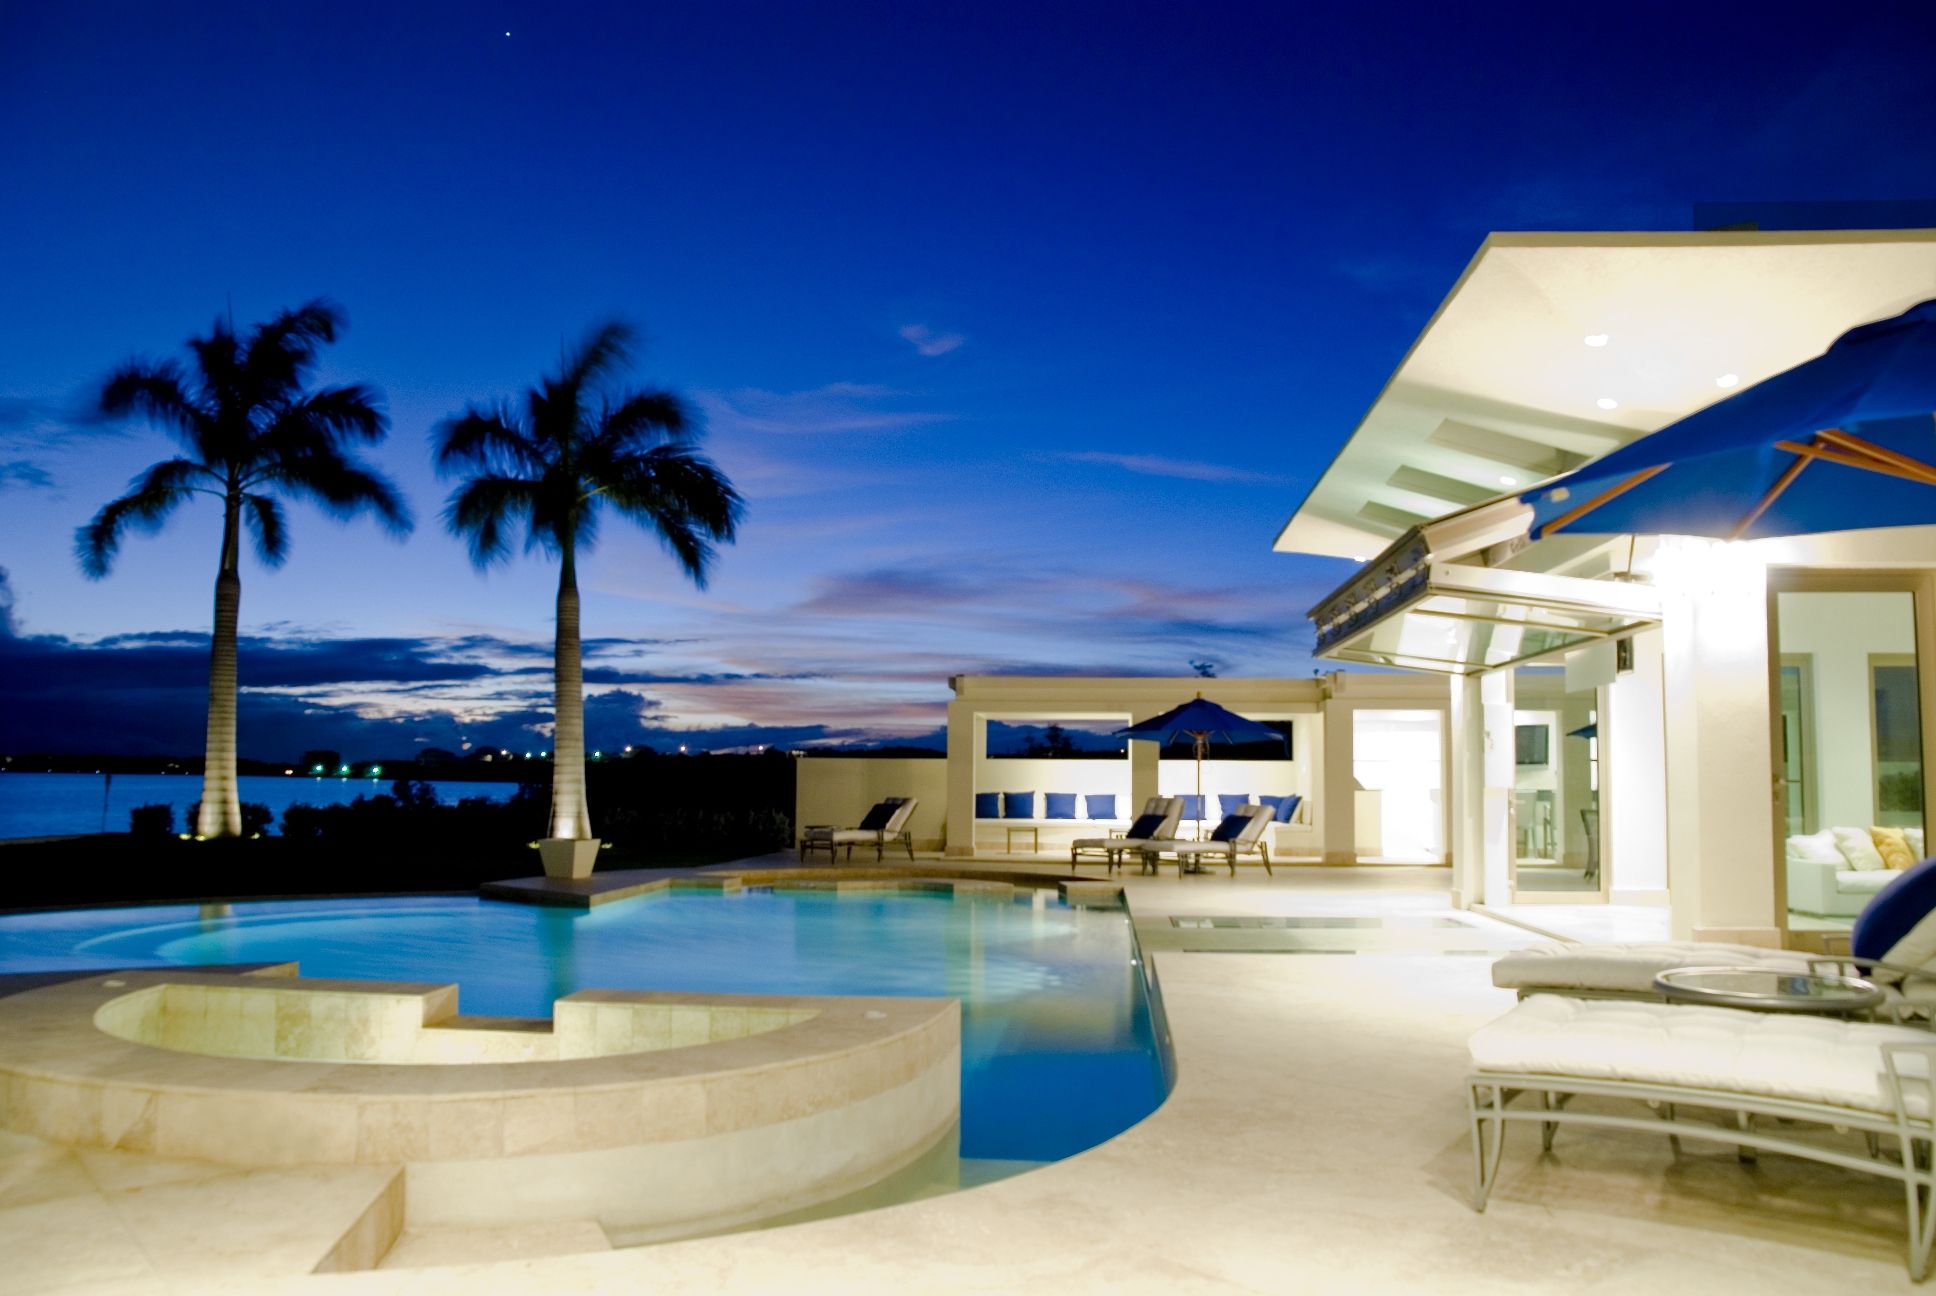 View our villa rentals in Anguilla